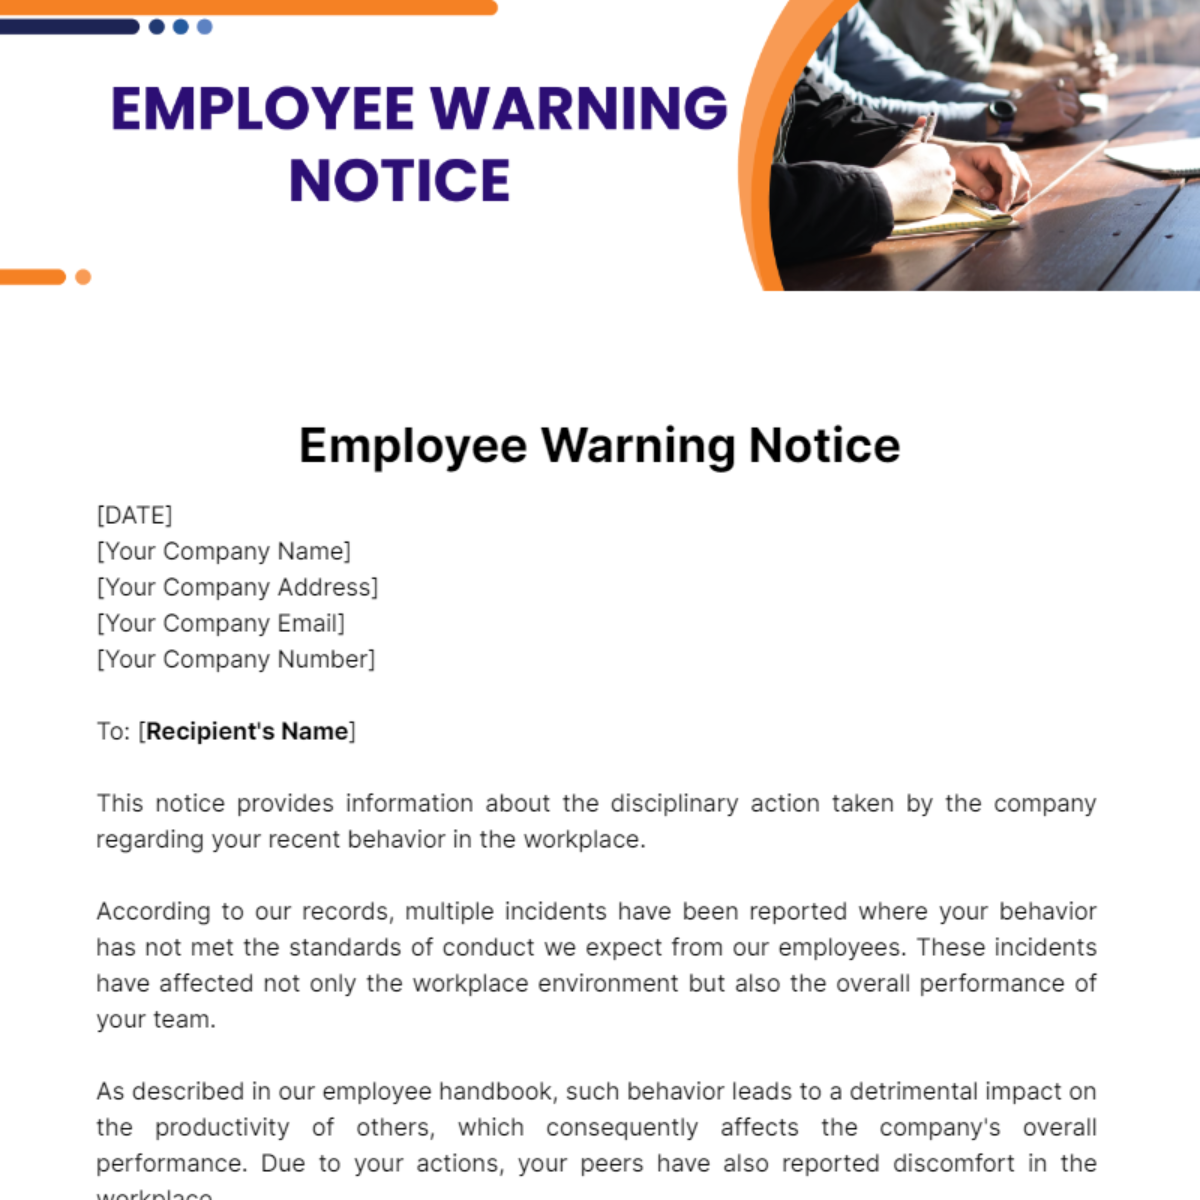 Employee Warning Notice Template